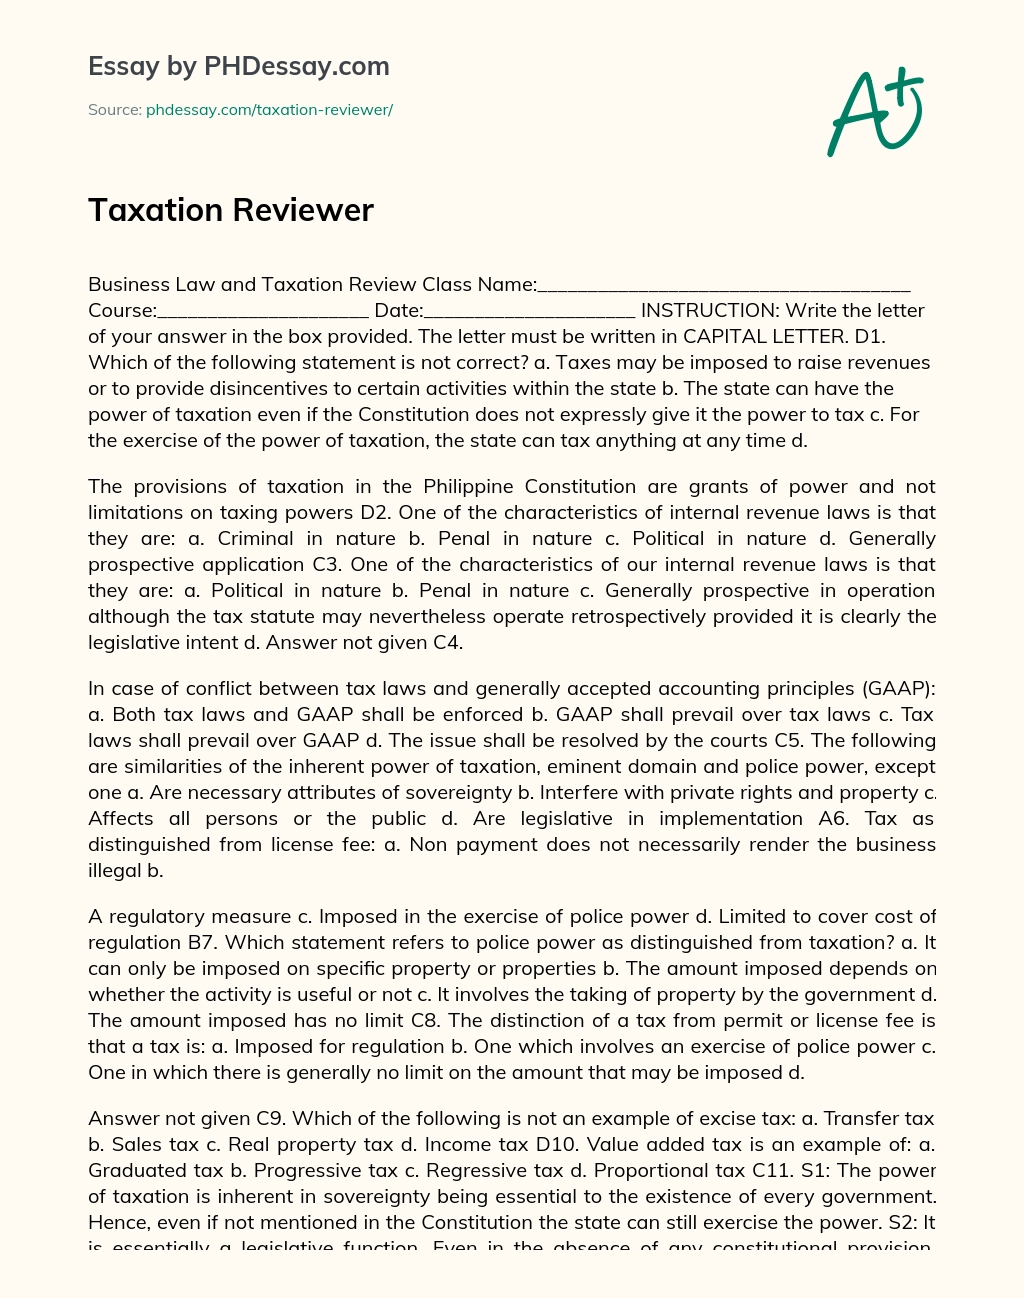 Taxation Reviewer essay